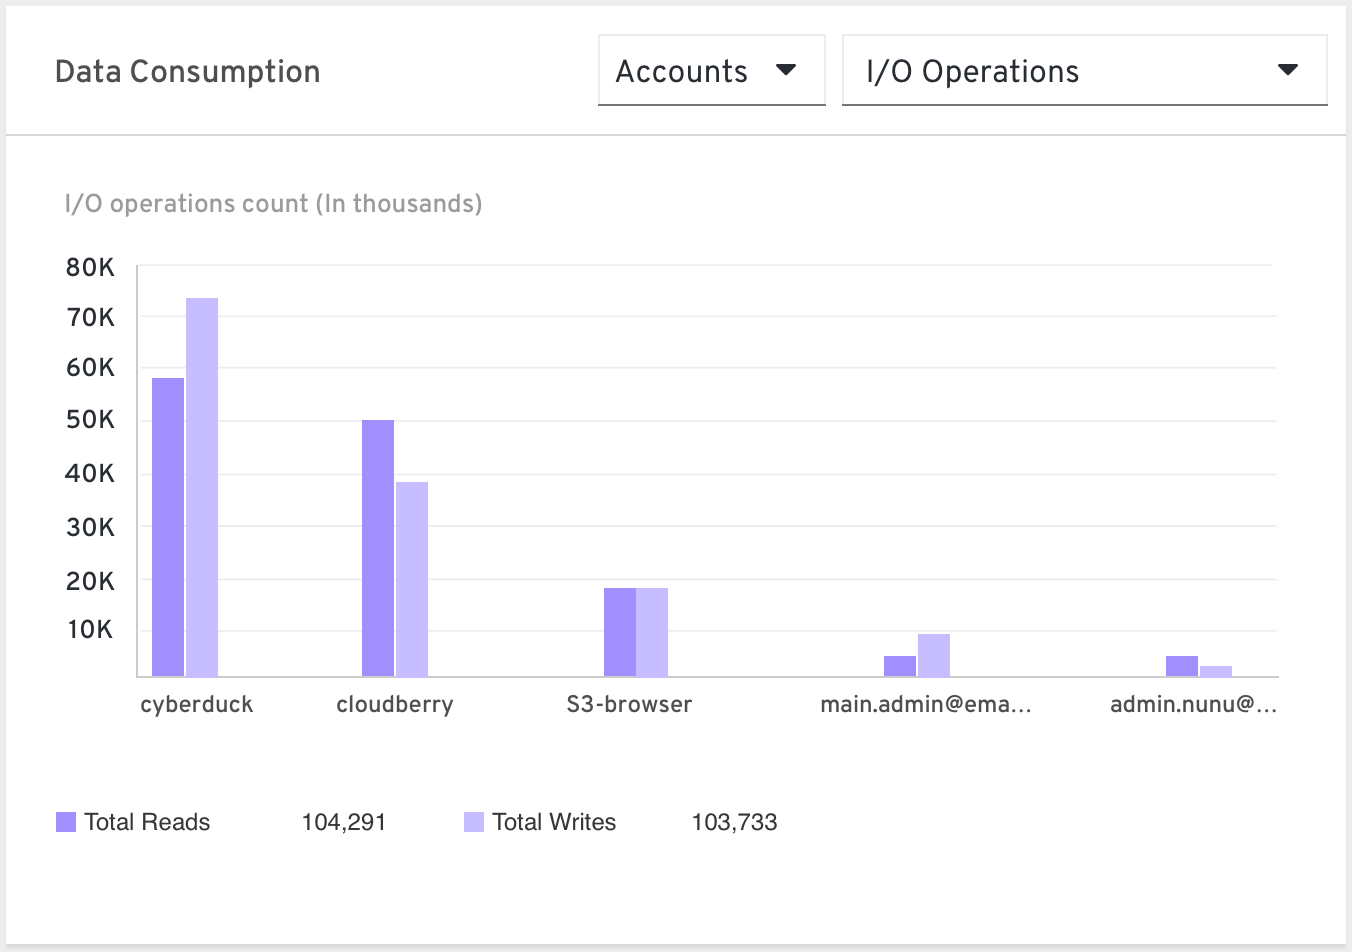 Accounts by I/O operations